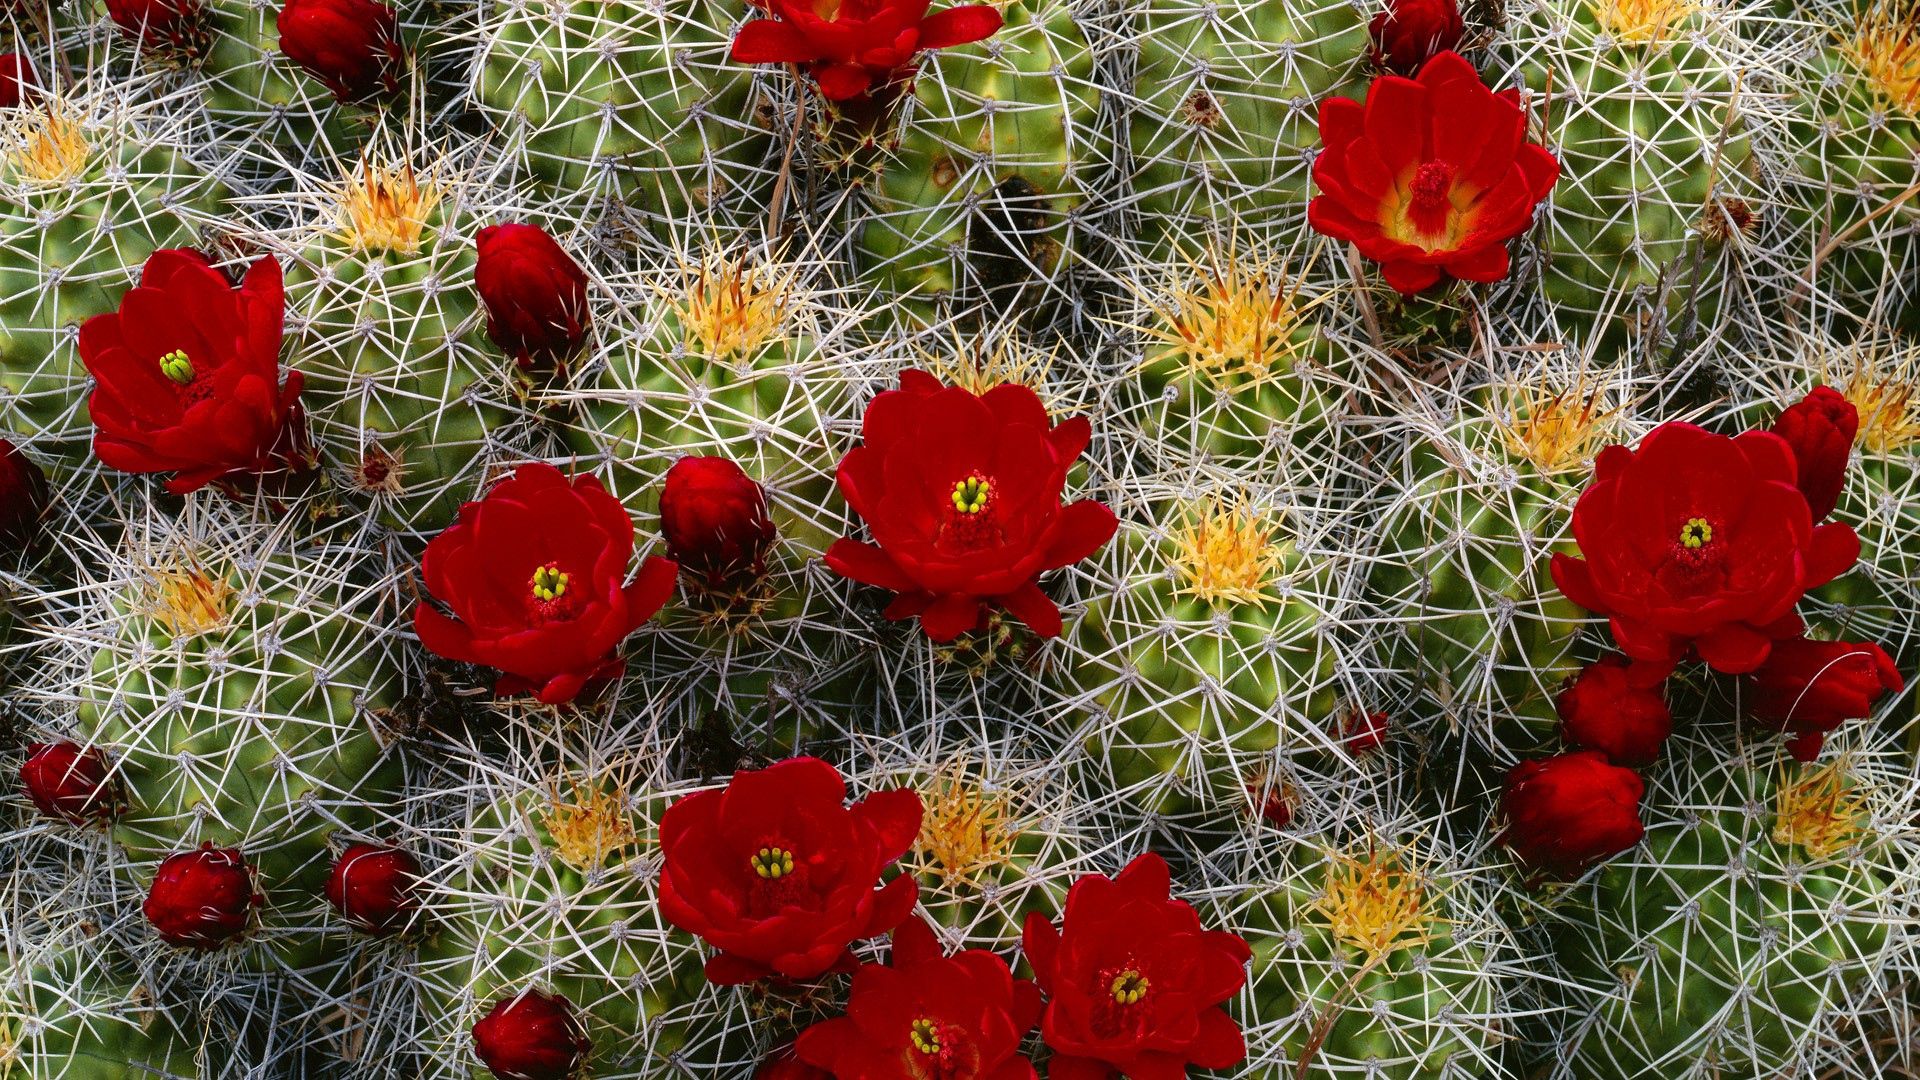 81719 descargar imagen cactus, flores, aguja, flor, florecer, floración, cogollos, brotes, cacto: fondos de pantalla y protectores de pantalla gratis